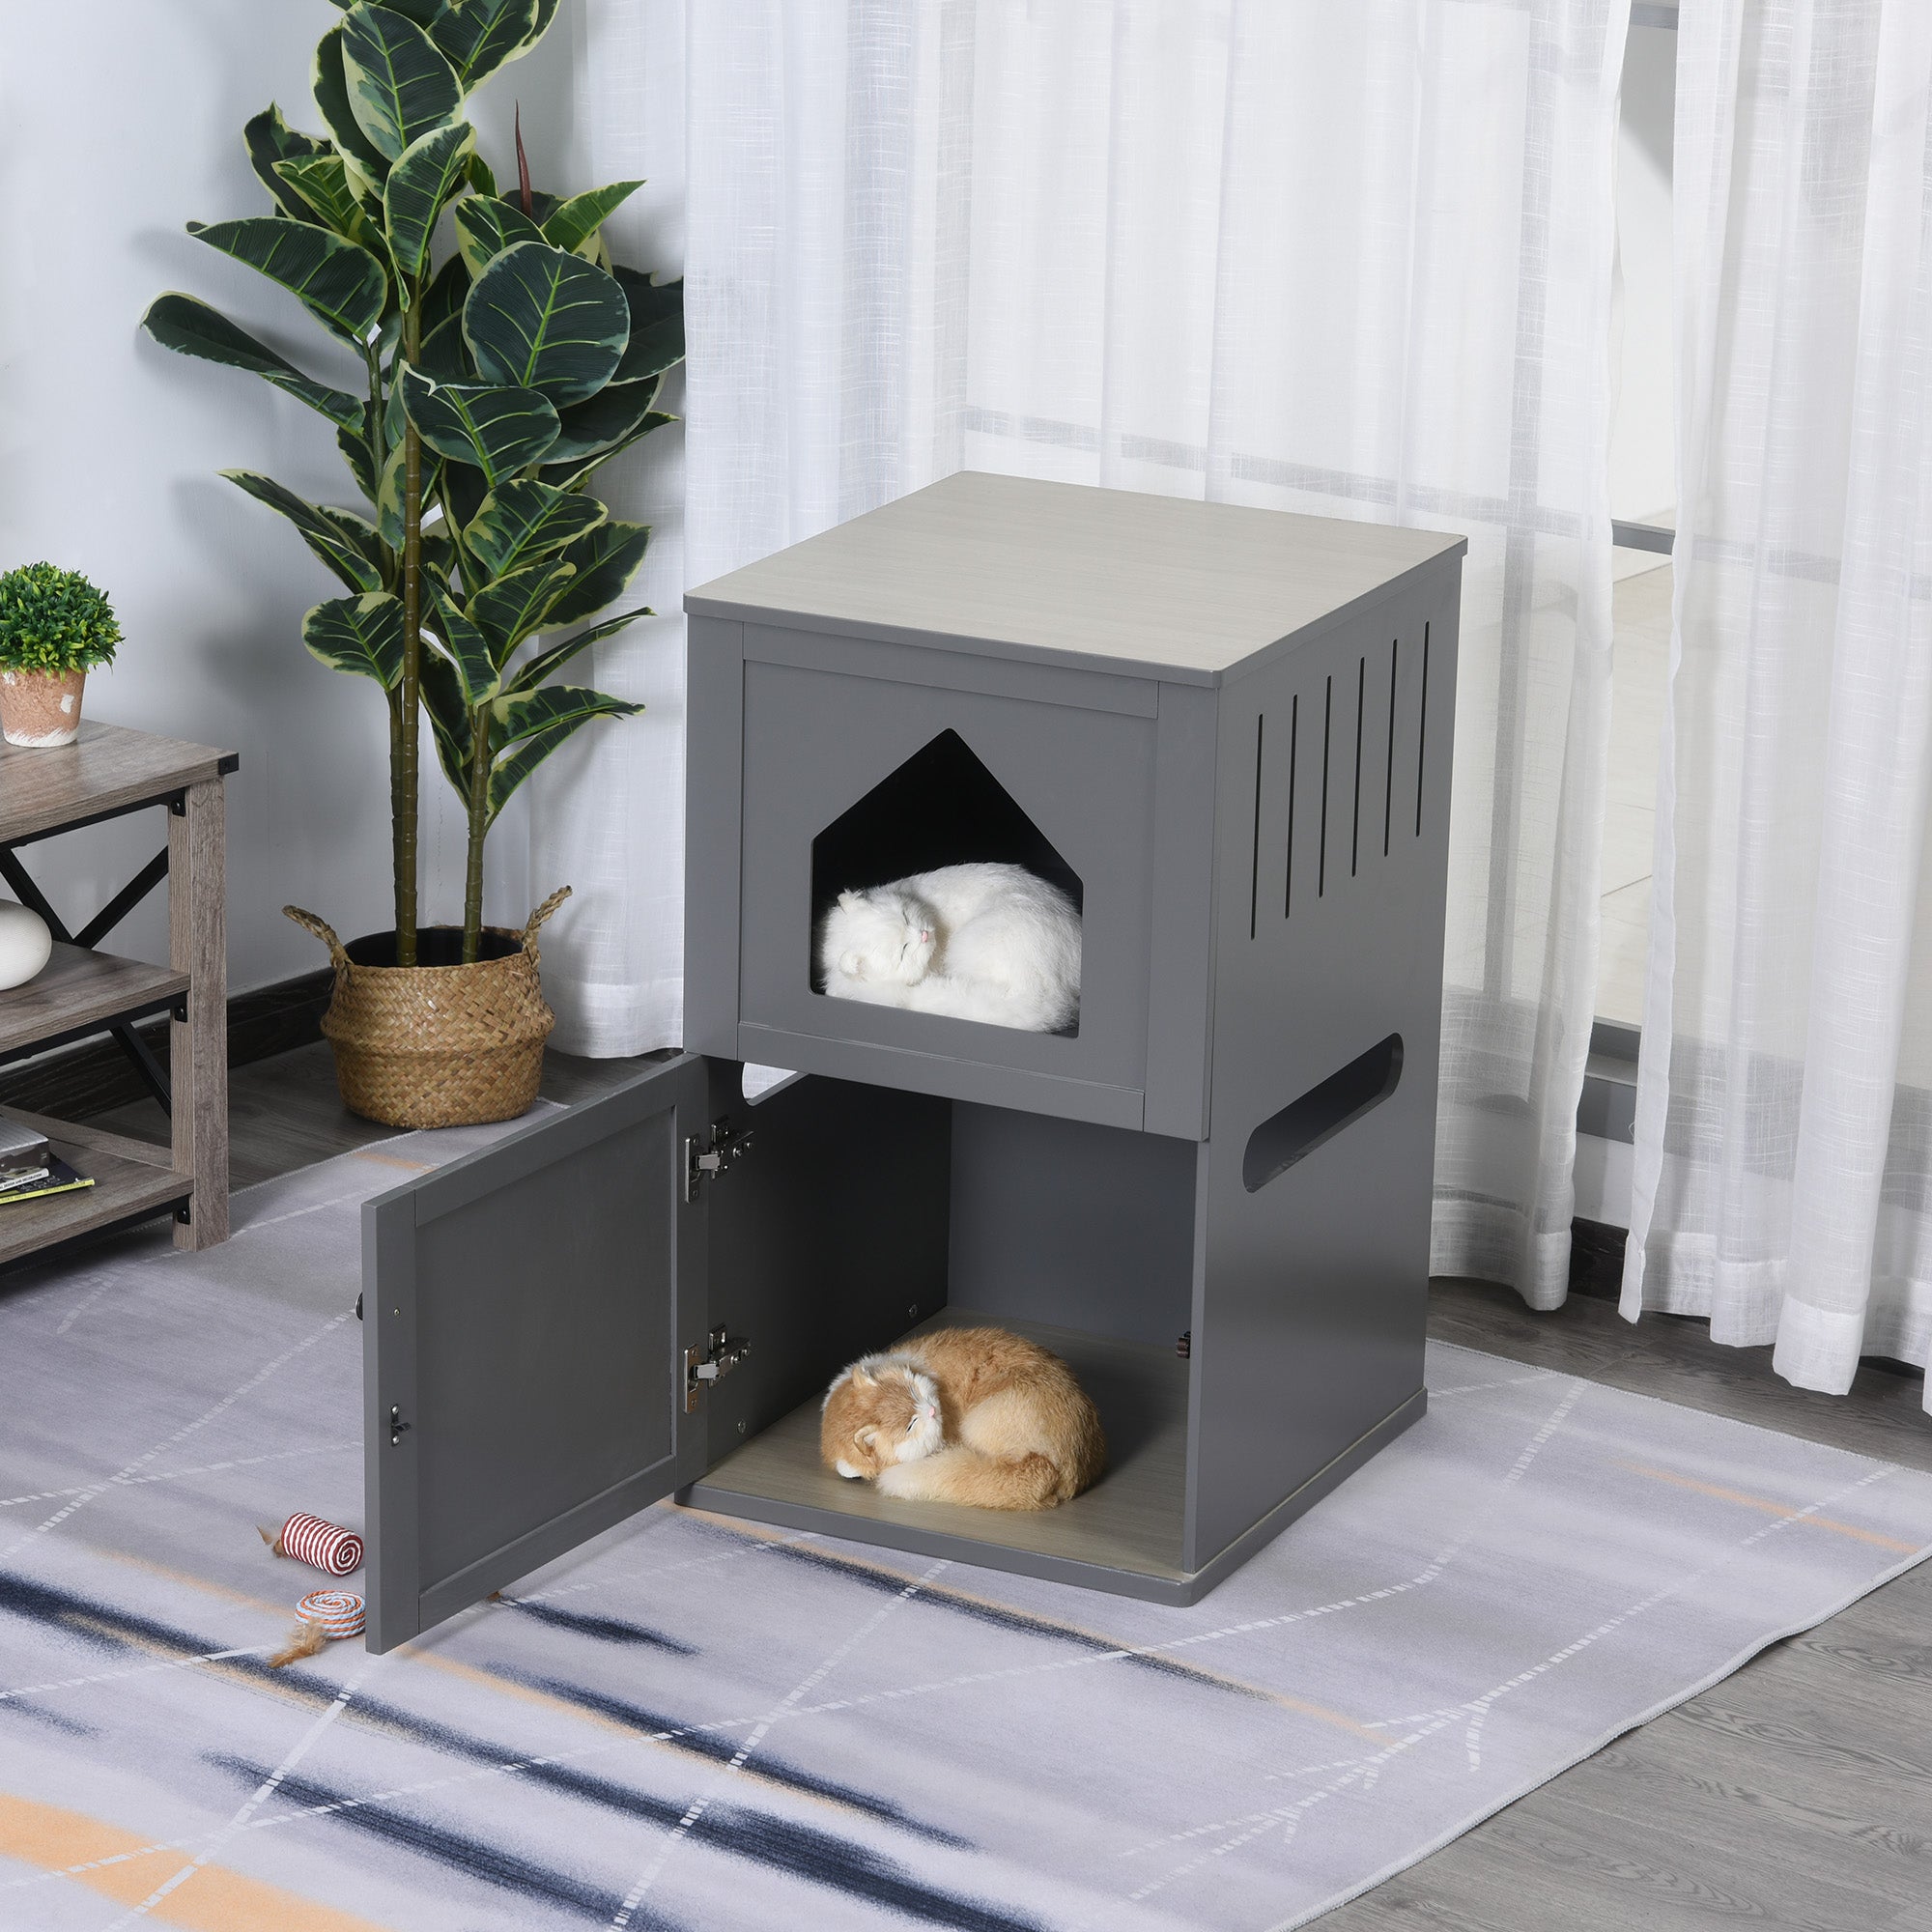 Double-Decker Cat Litter Box 2 Story Pet Crate Luxury Toilet House, Grey